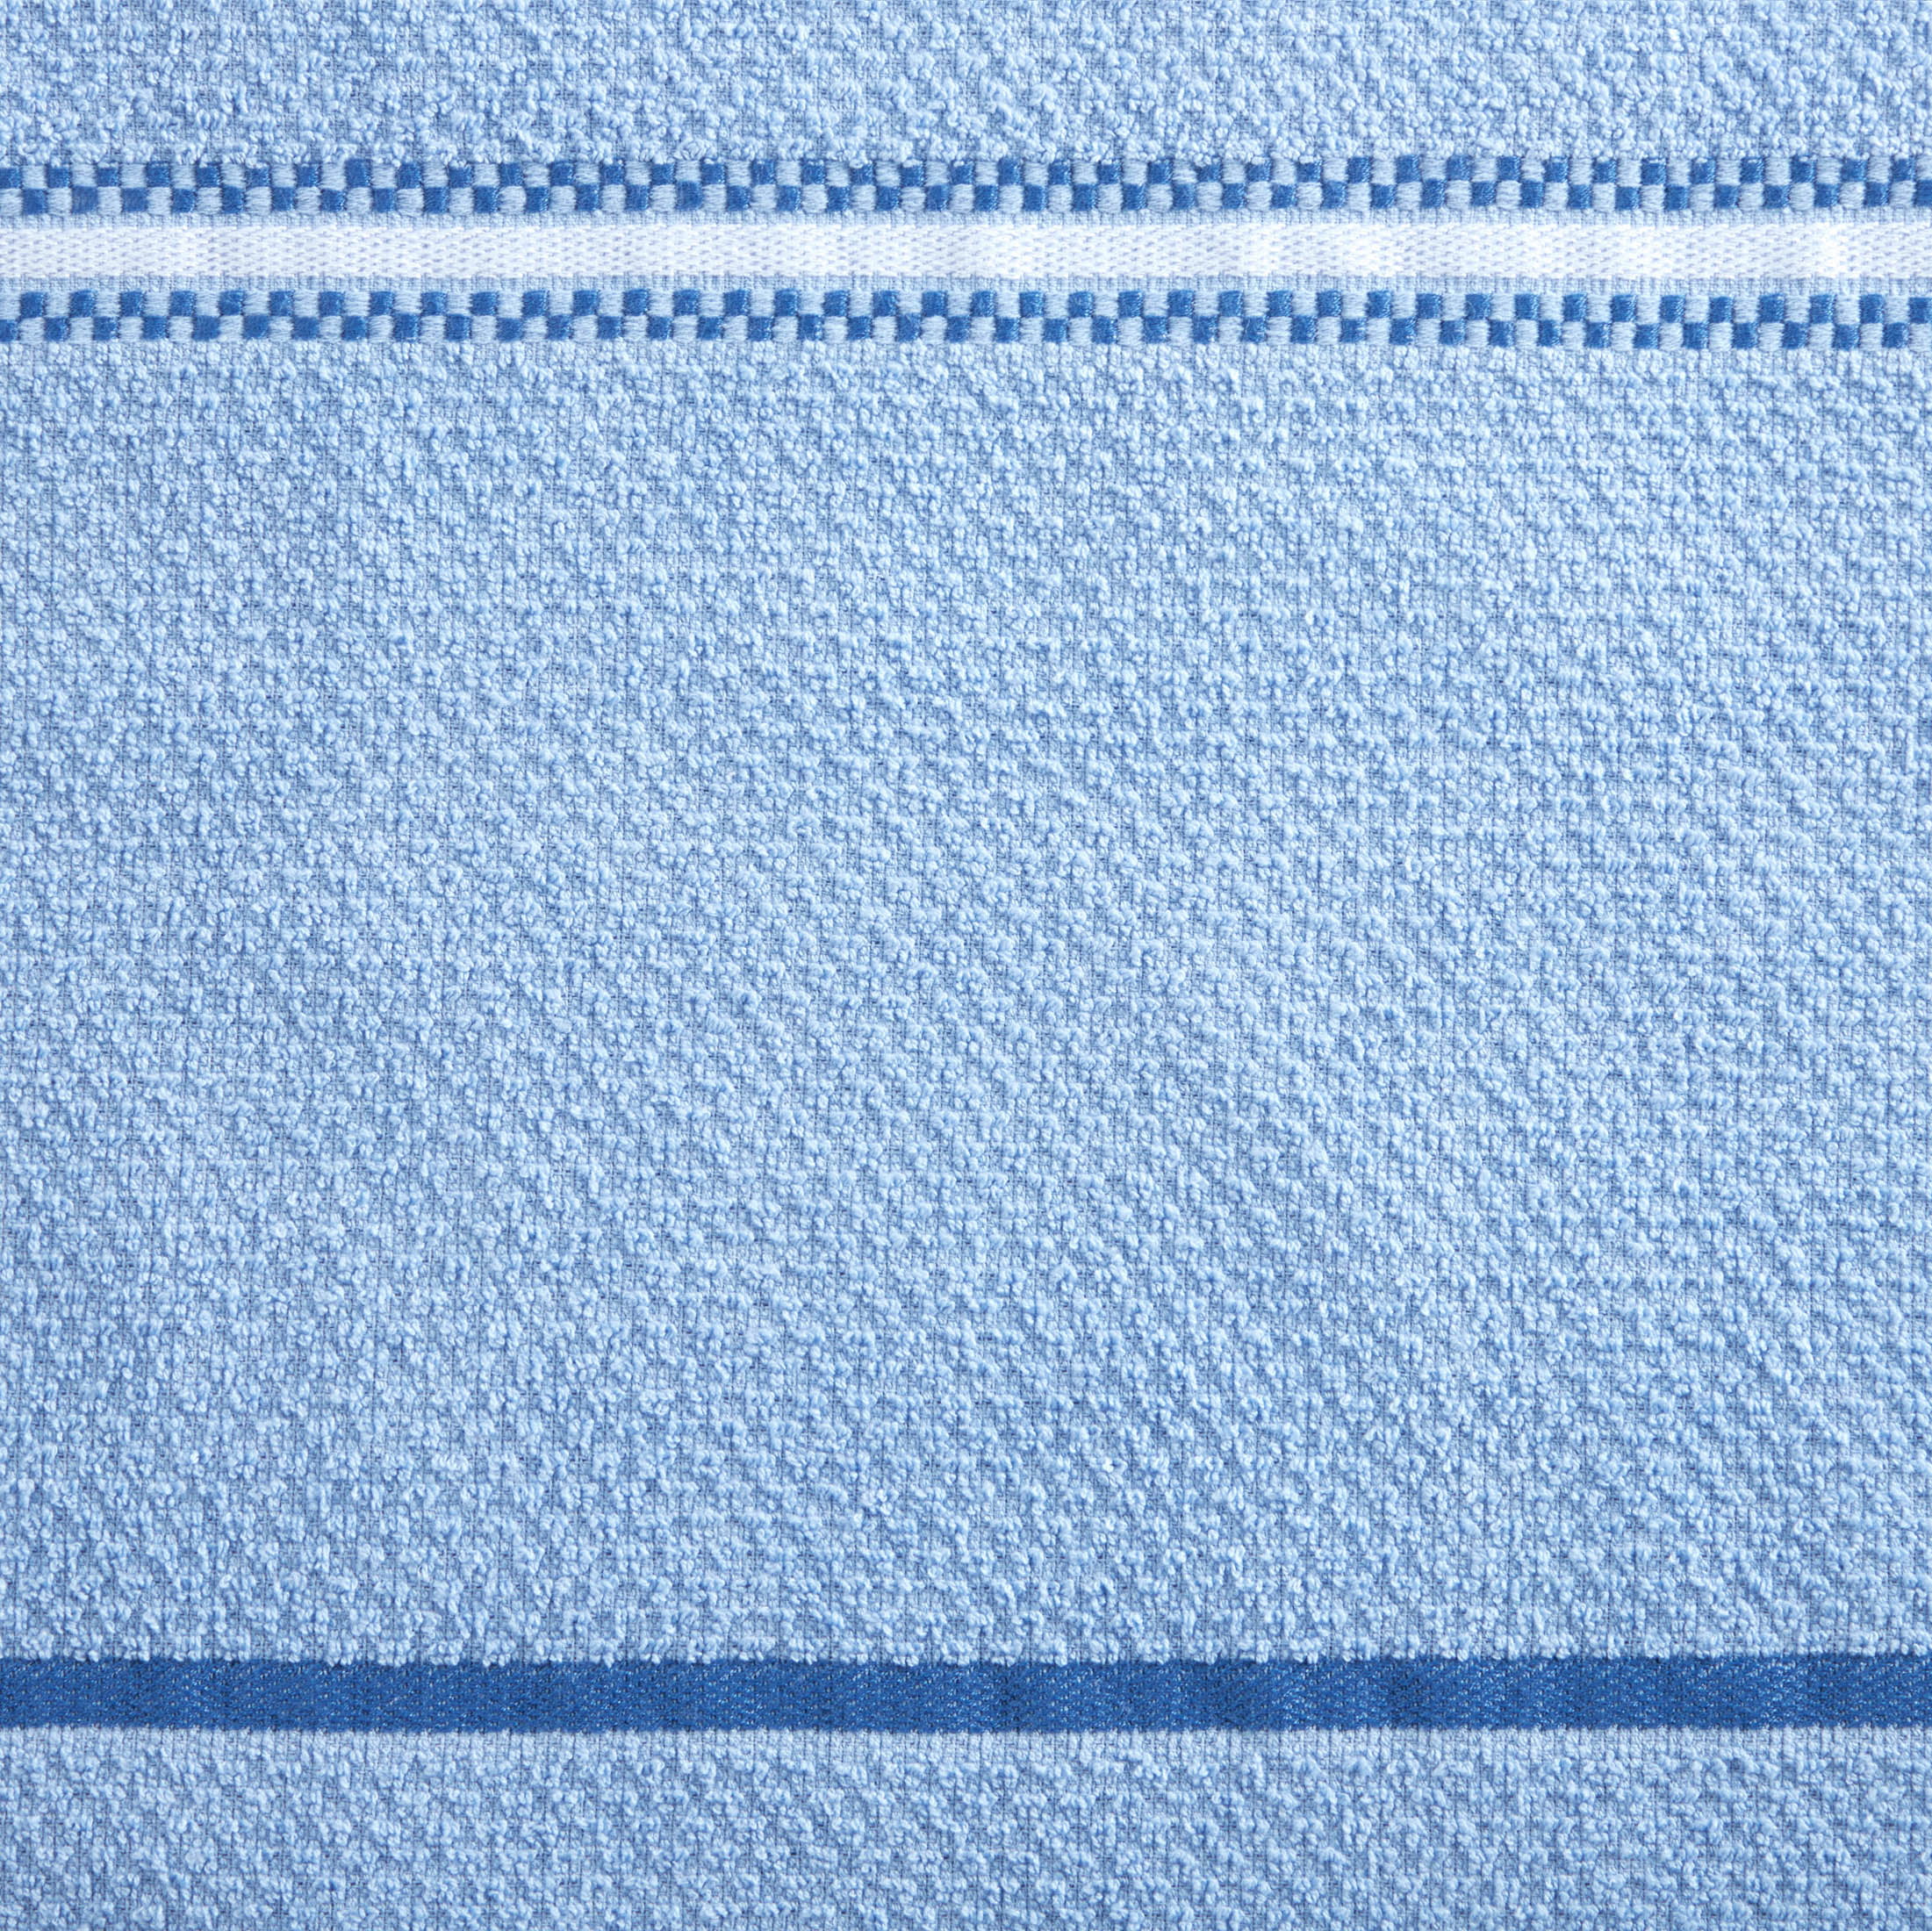 MARTHA STEWART KITCHEN DISH TOWELS (2) BUTTERFLY FLORAL PINK BLUE100%  COTTON NWT